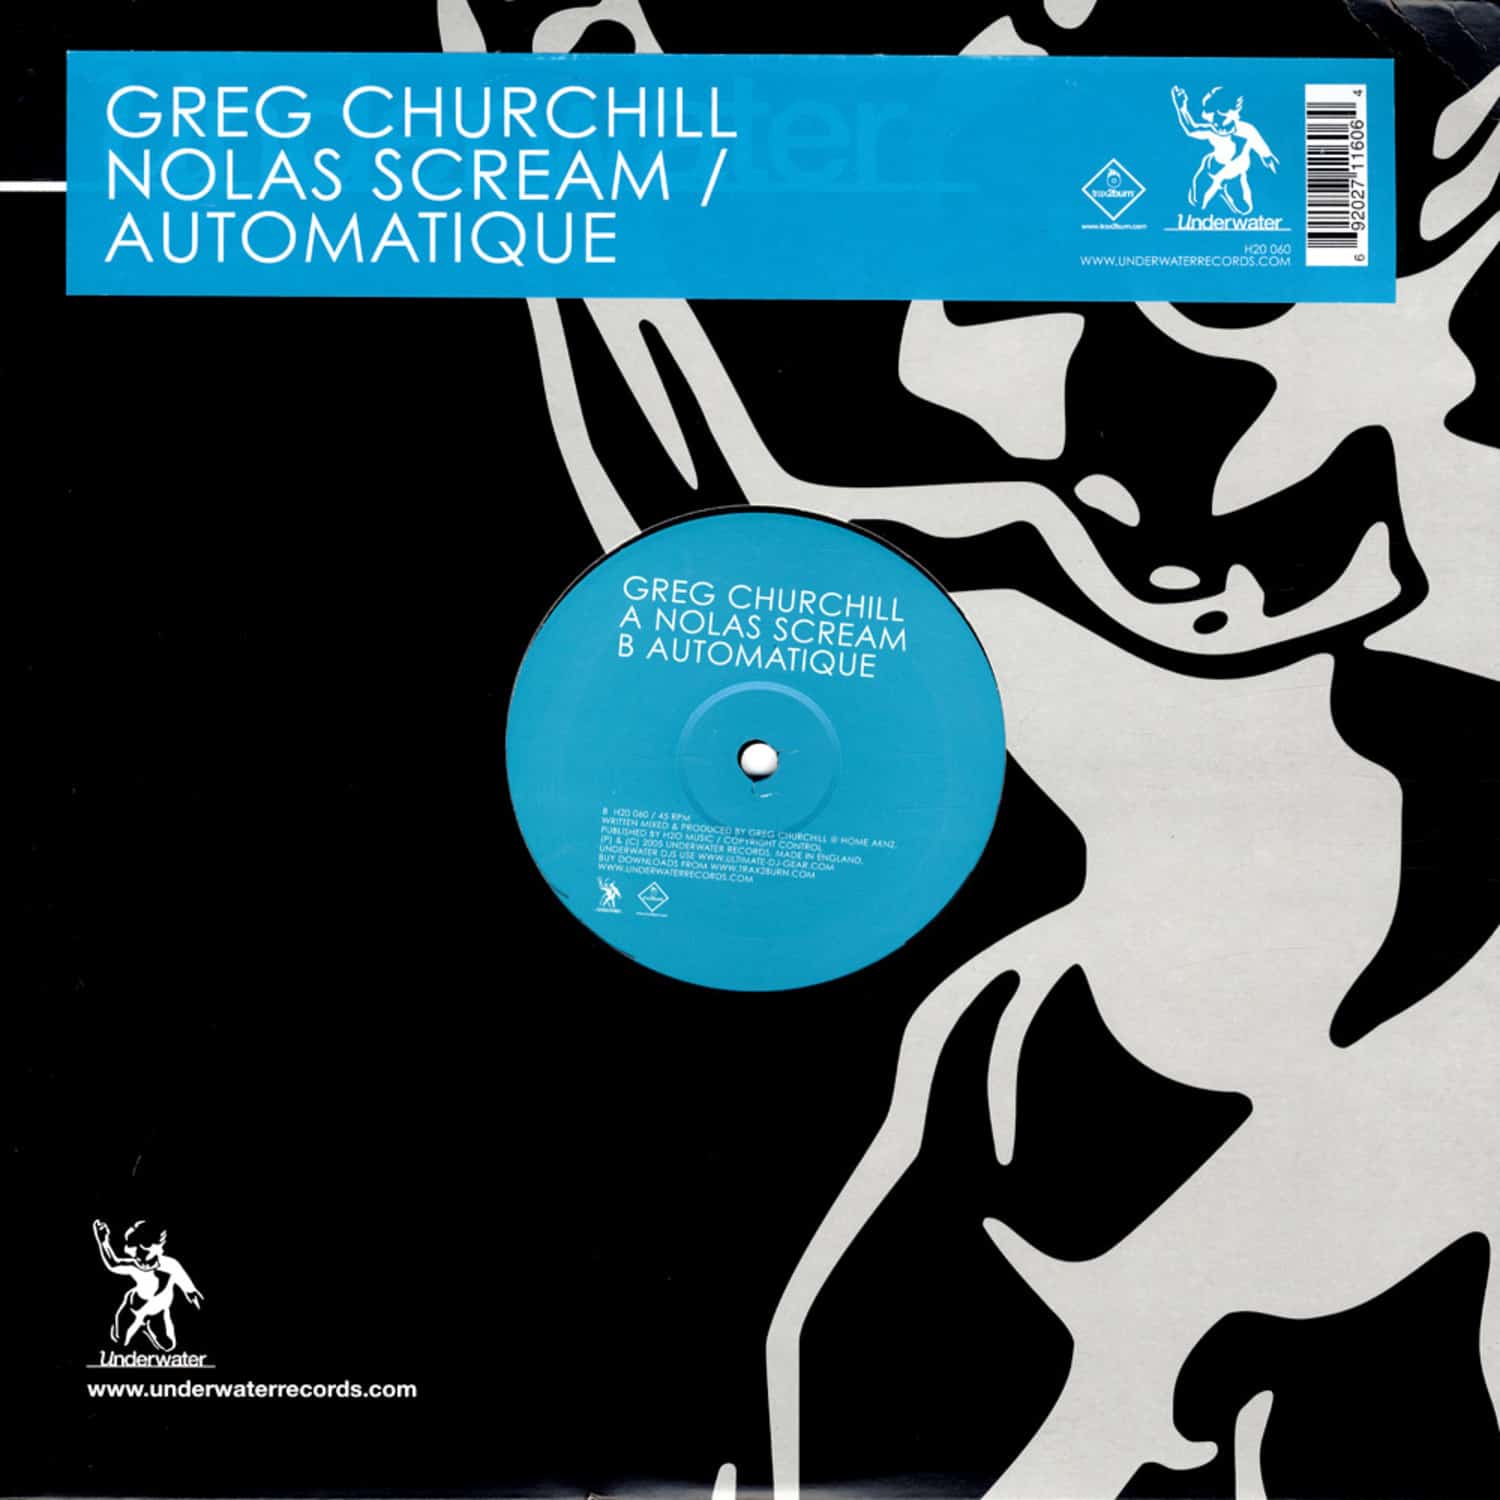 Greg Churchill - NOLAS SCREAM / AUTOMATIQUE